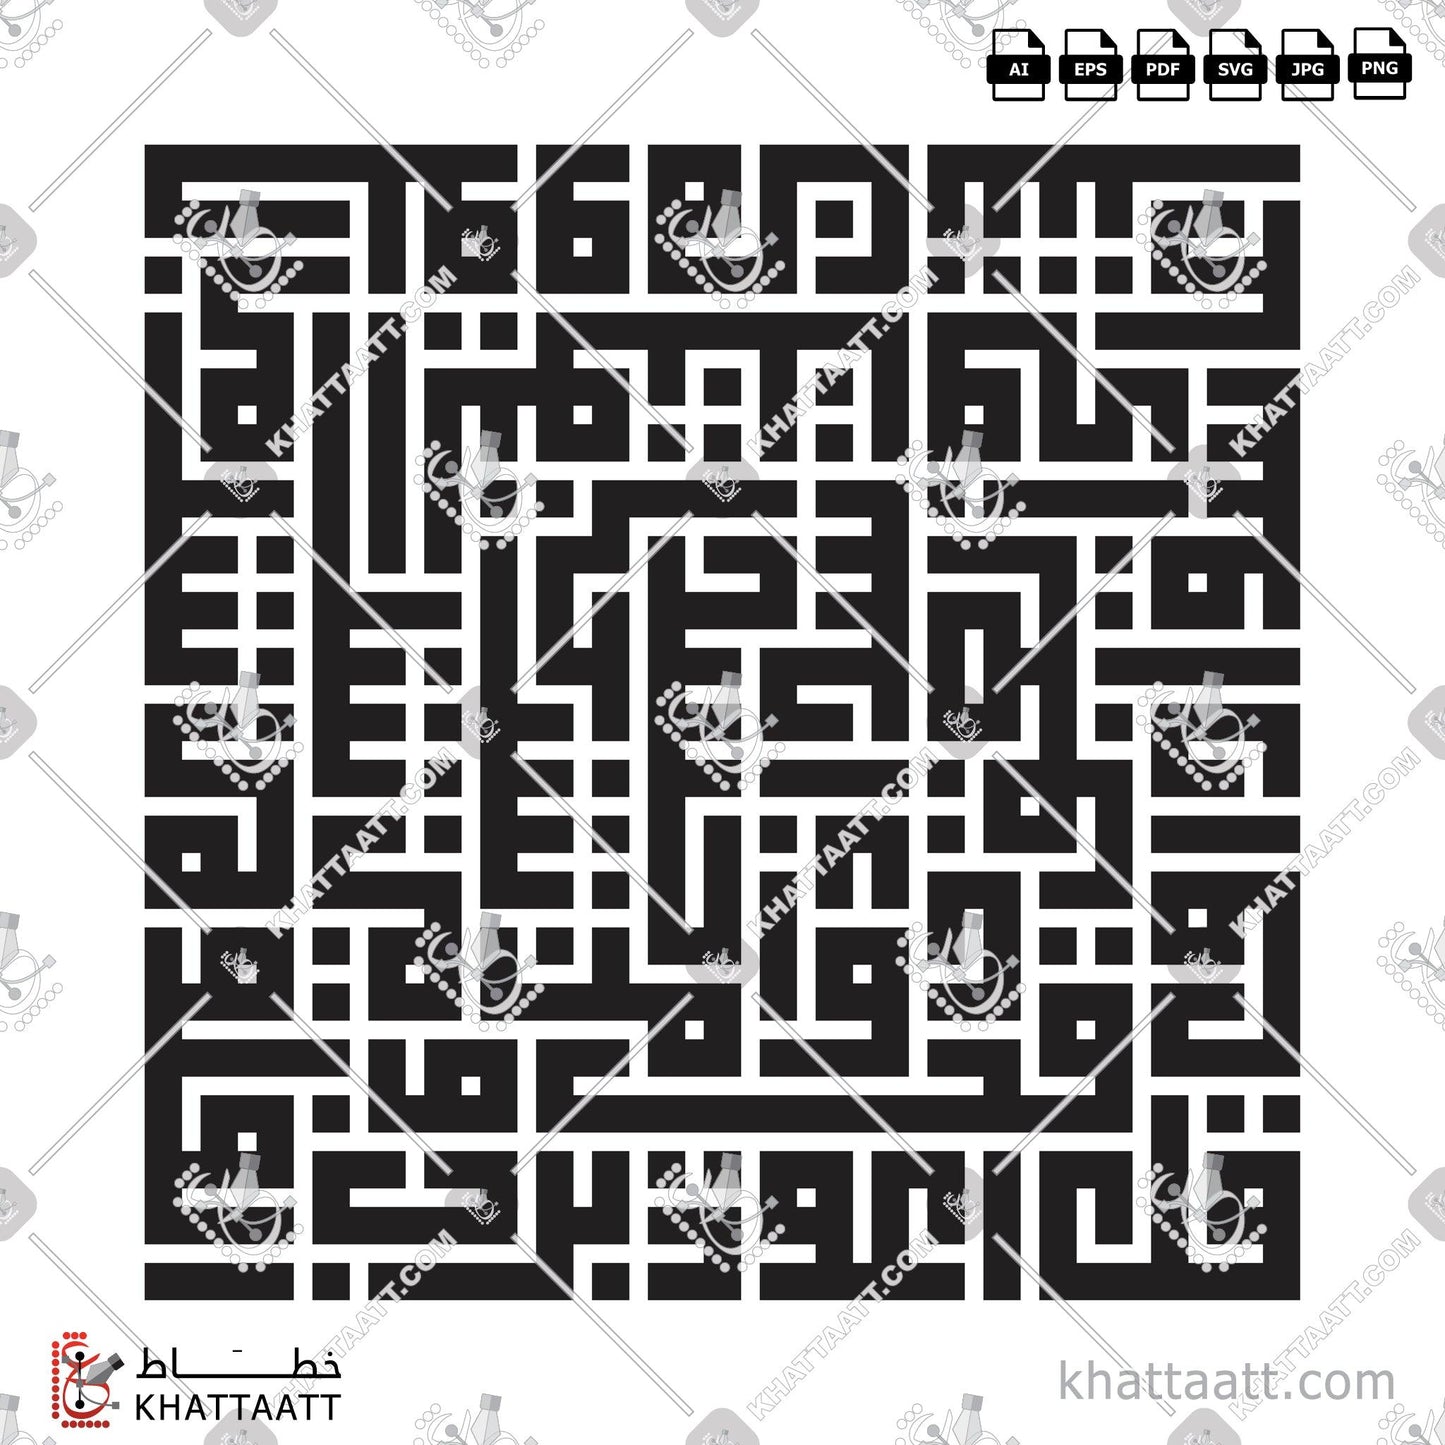 Digital Arabic calligraphy vector of Surat Al-Falaq - سورة الفلق in Kufi - الخط الكوفي